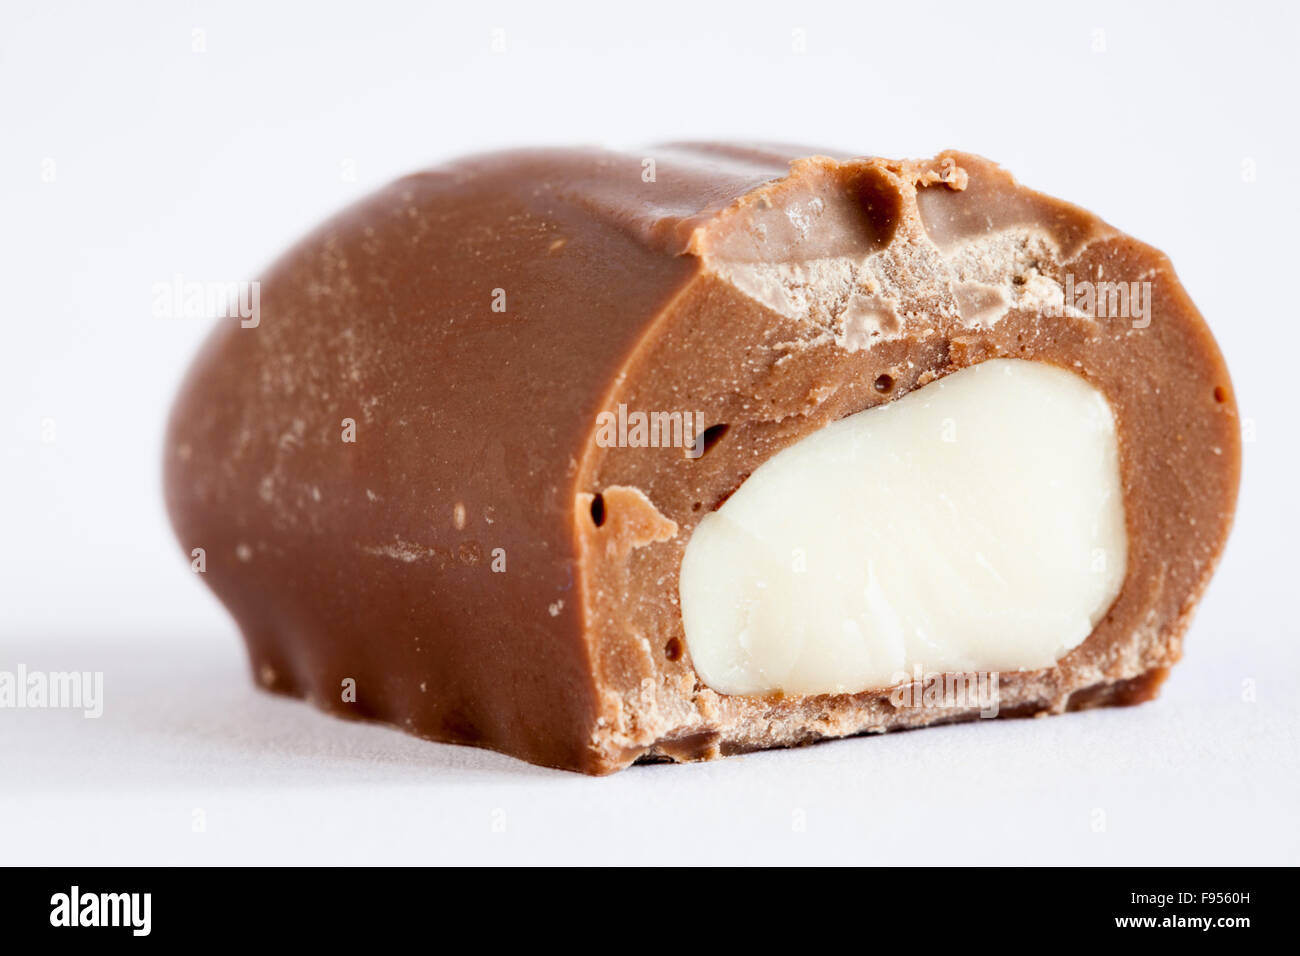 Single milk chocolate coated brazil nut bitten into isolated on white background Stock Photo